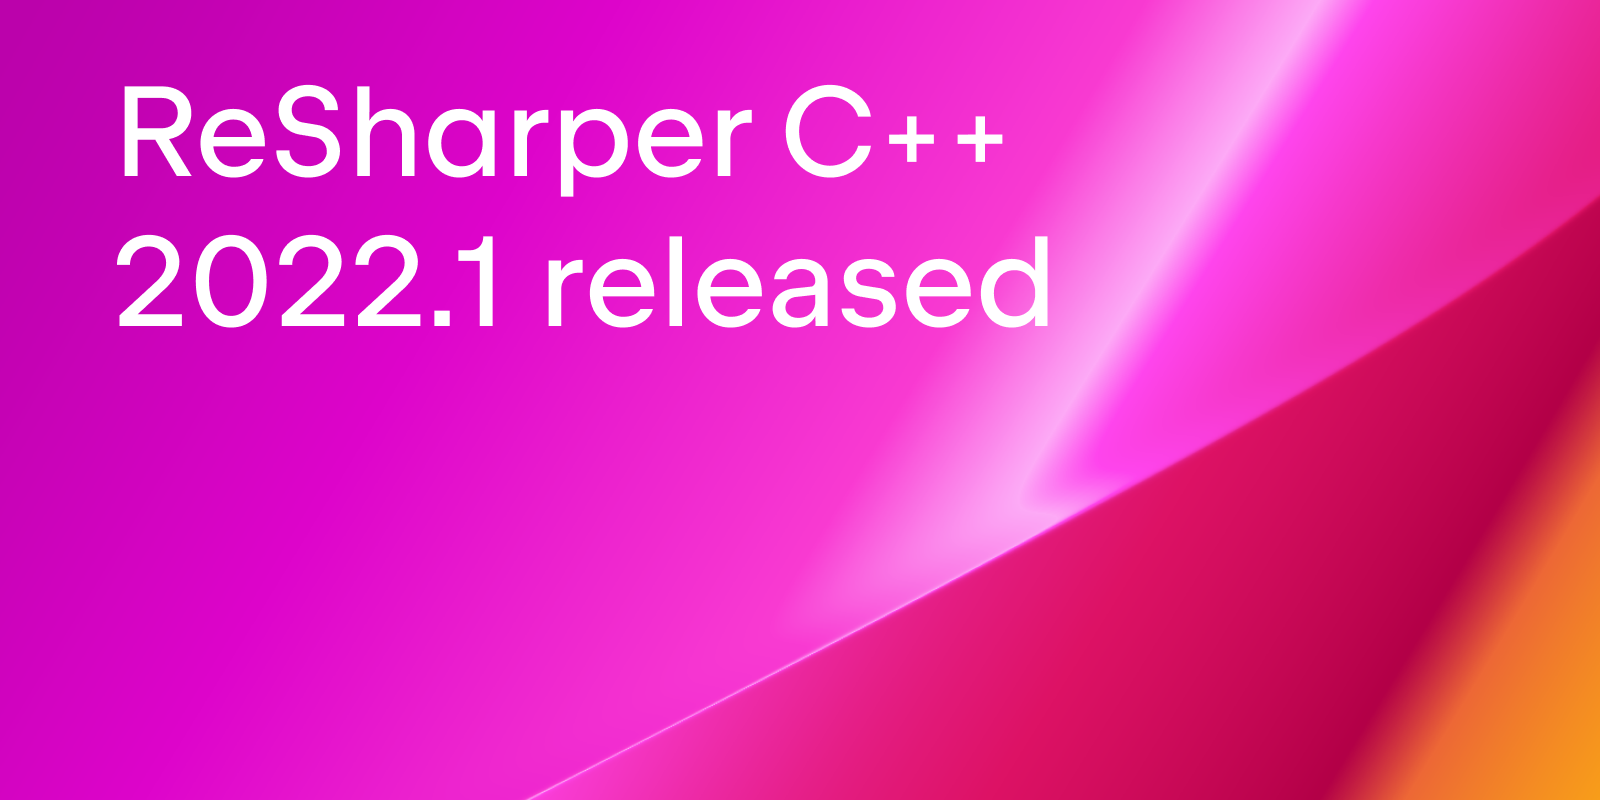 ReSharper C++ 2022.1